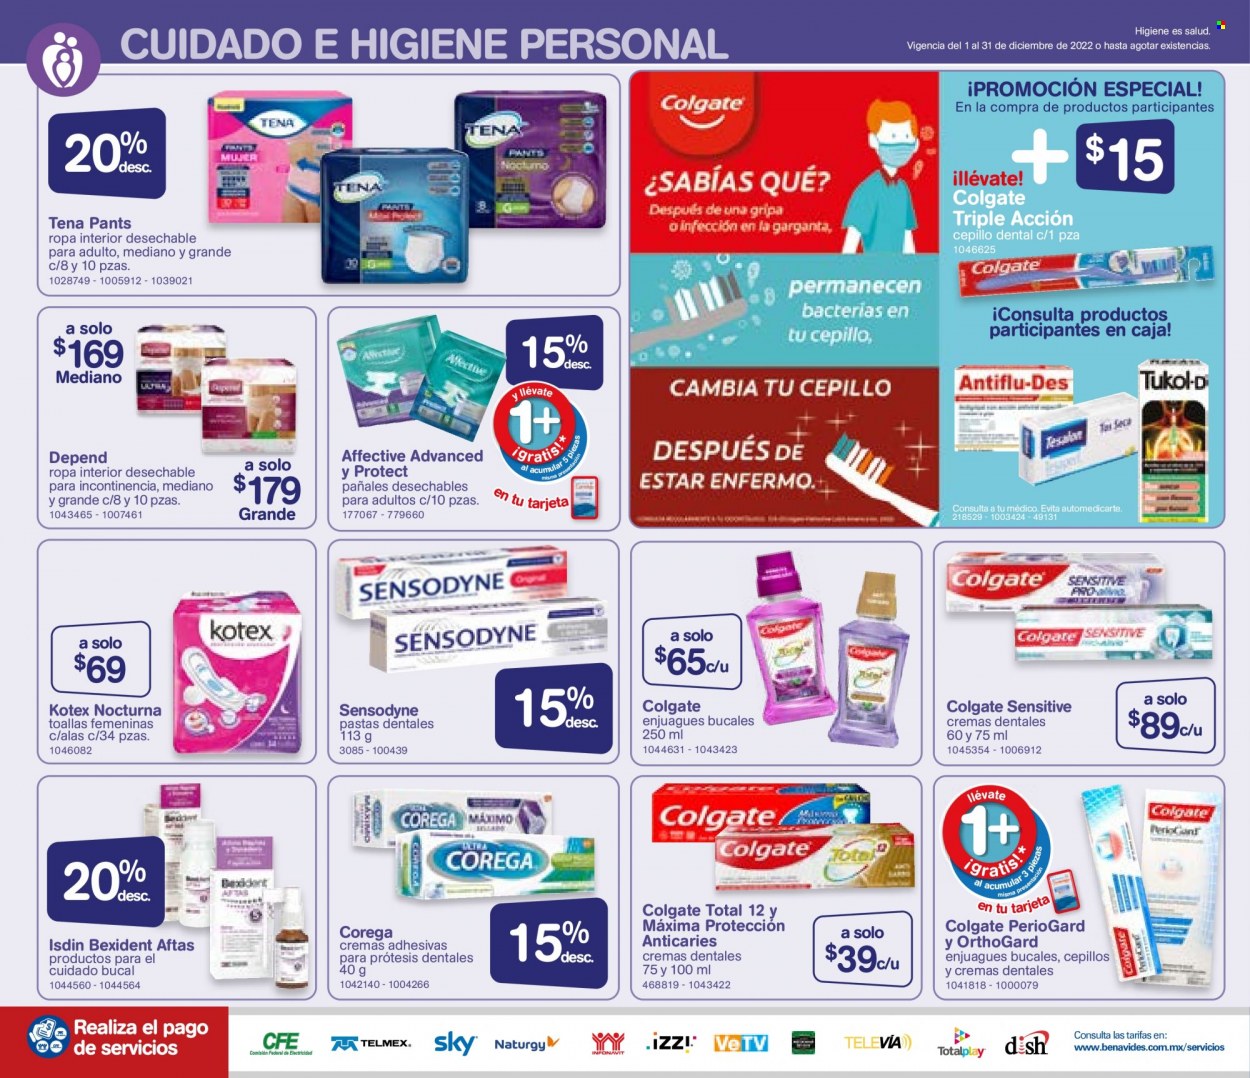 Catálogo Farmacias Benavides - 1.12.2022 - 31.12.2022.